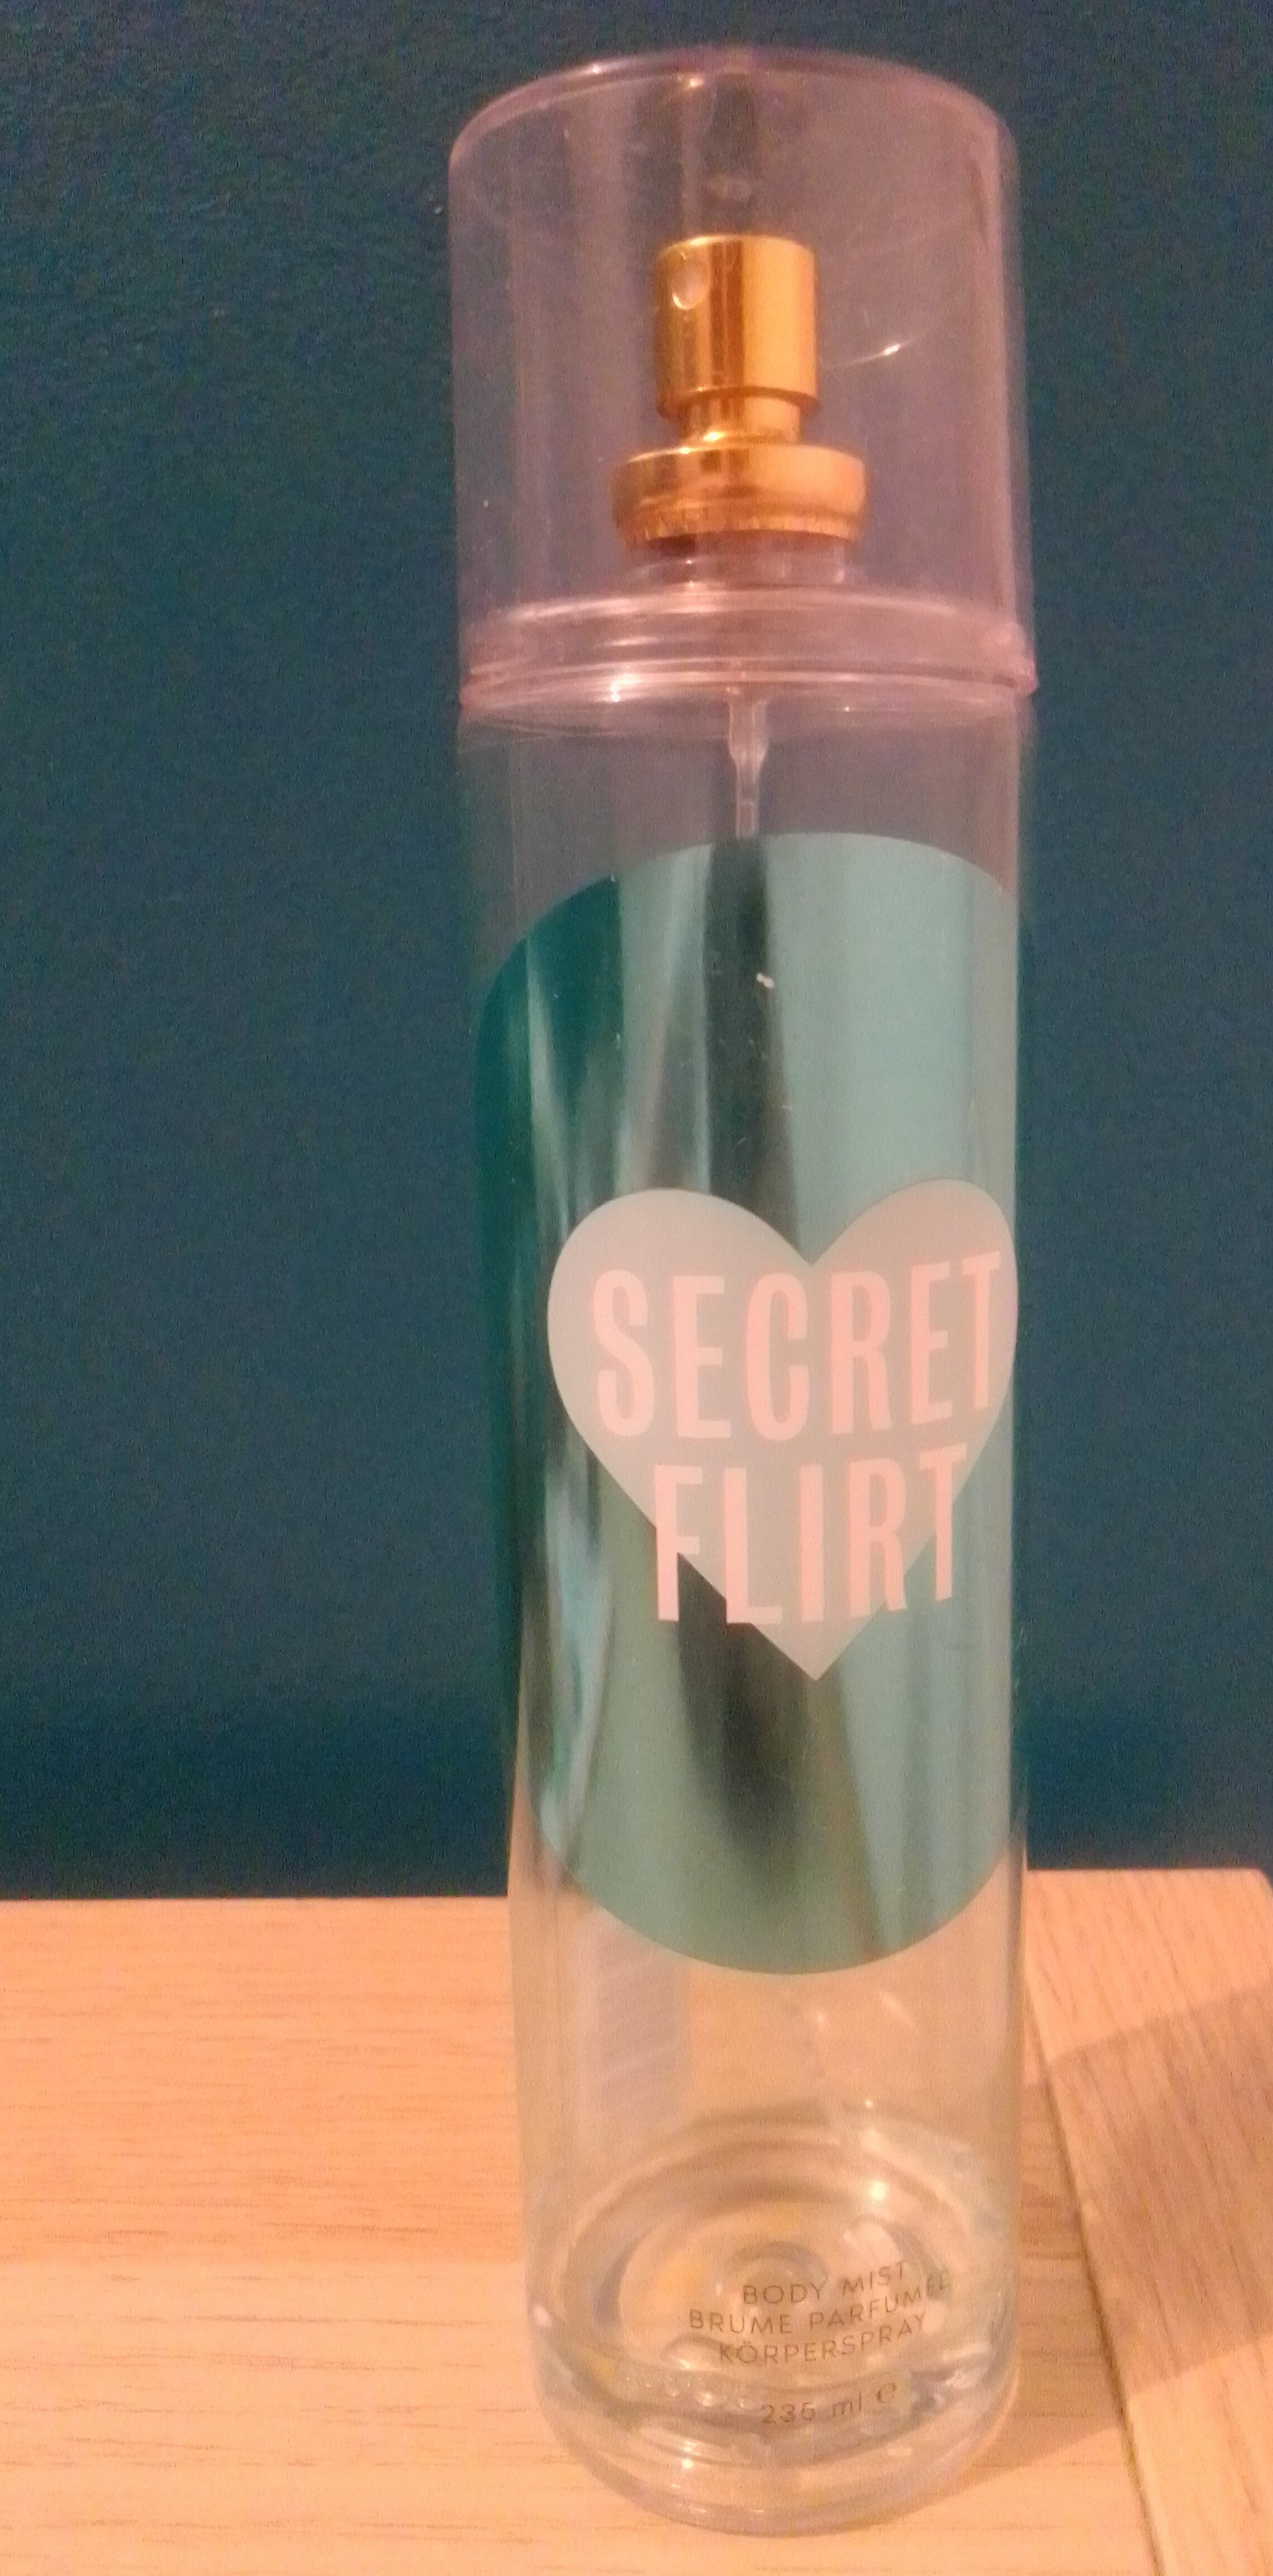 Secret Flirt - Product - fr